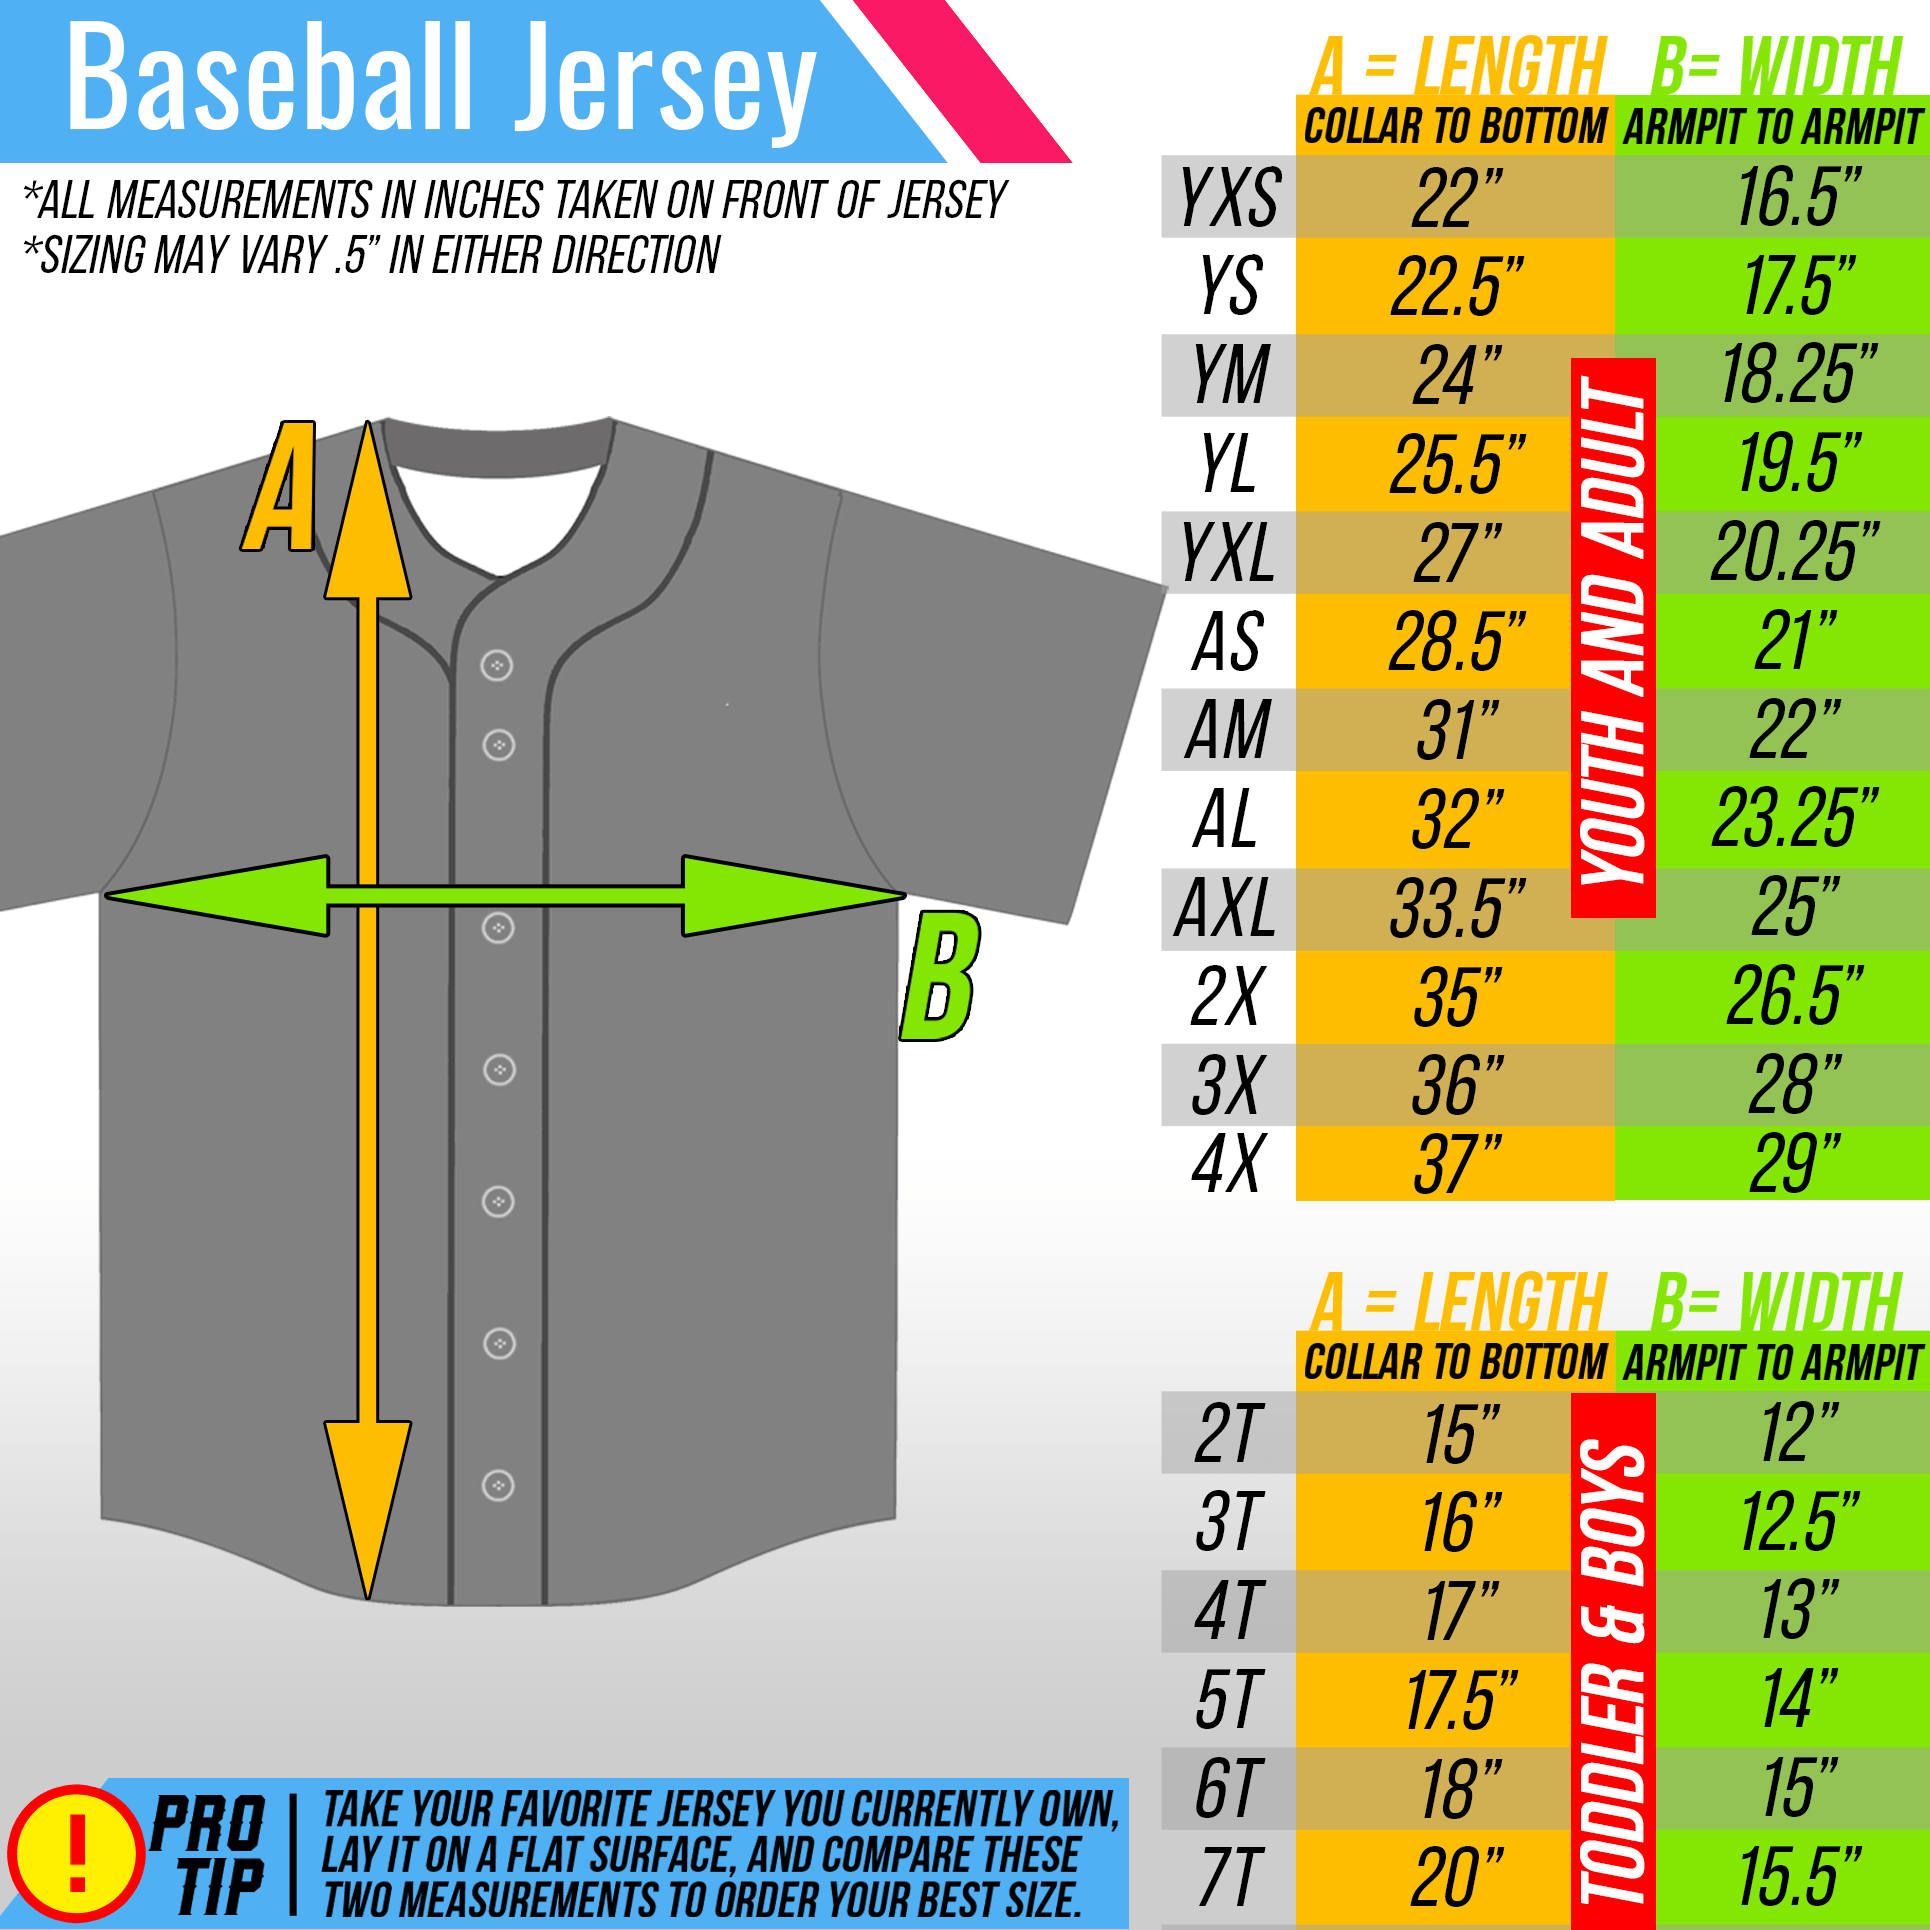 Dinger Season Seamhead Collection Baseball Jersey – Retro City Threads